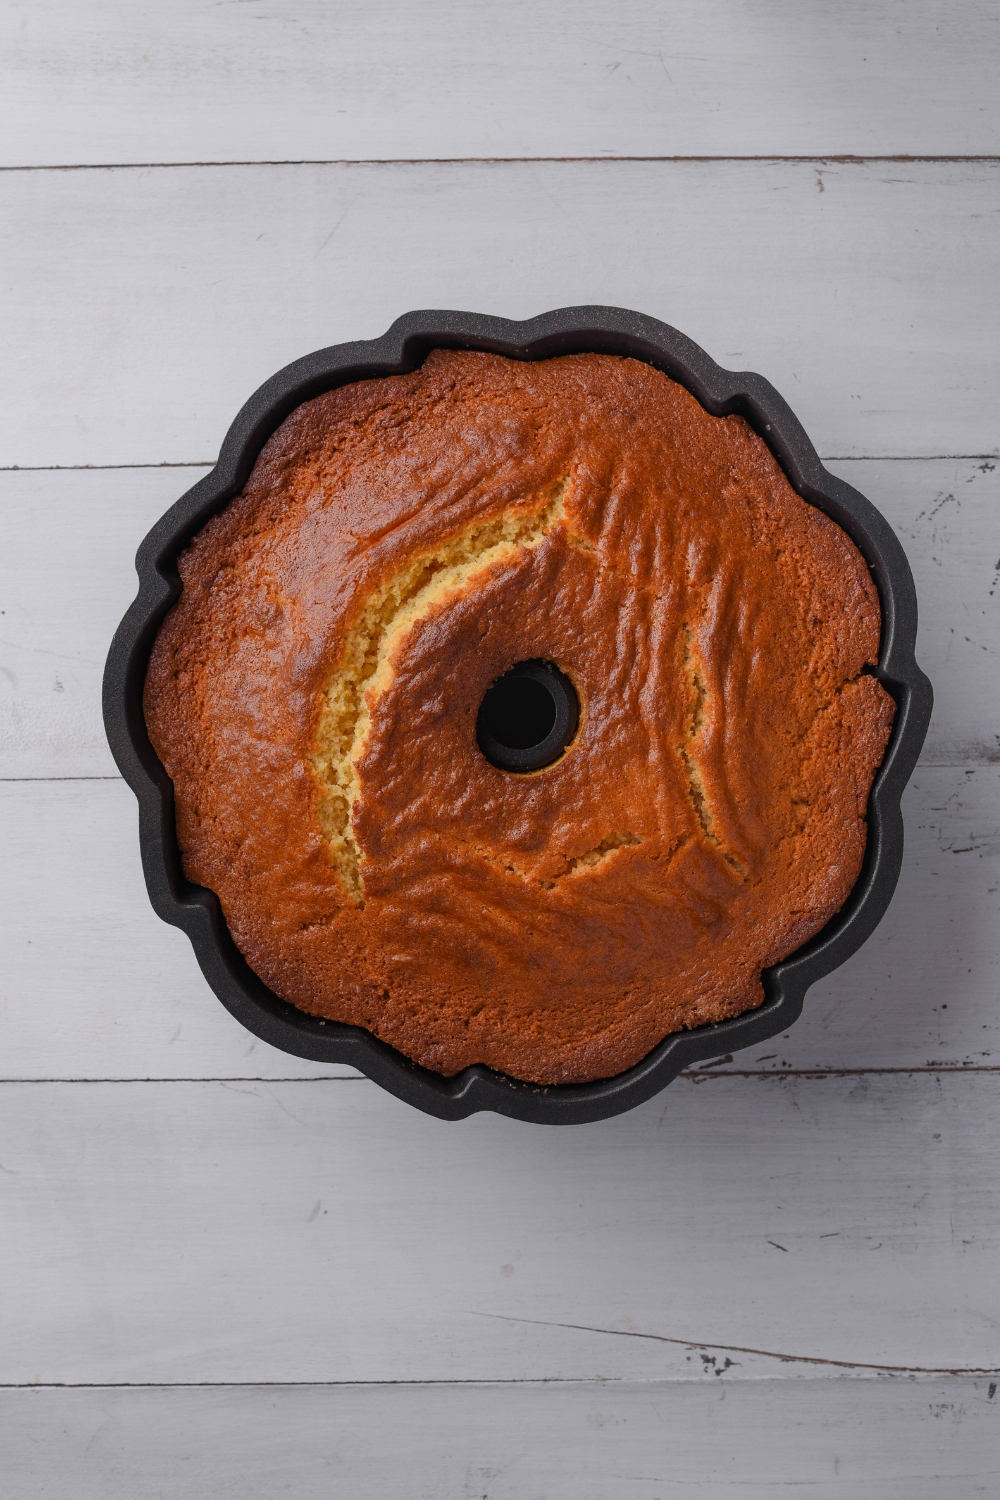 A golden brown cinnamon bundt cake cools in a black bundt pan.